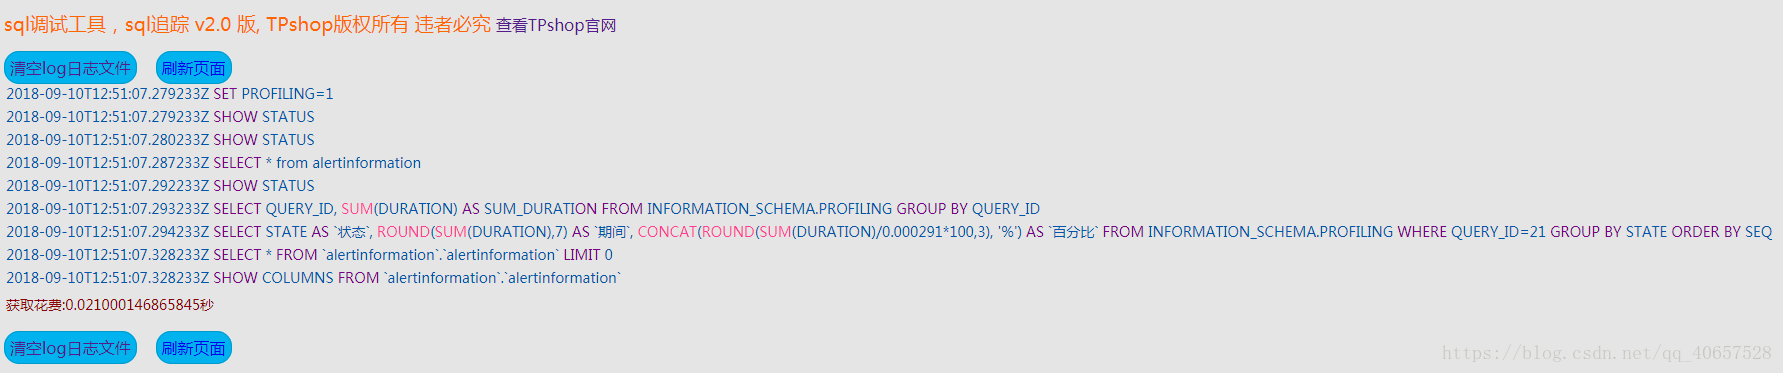 SQL追踪器显示操作信息